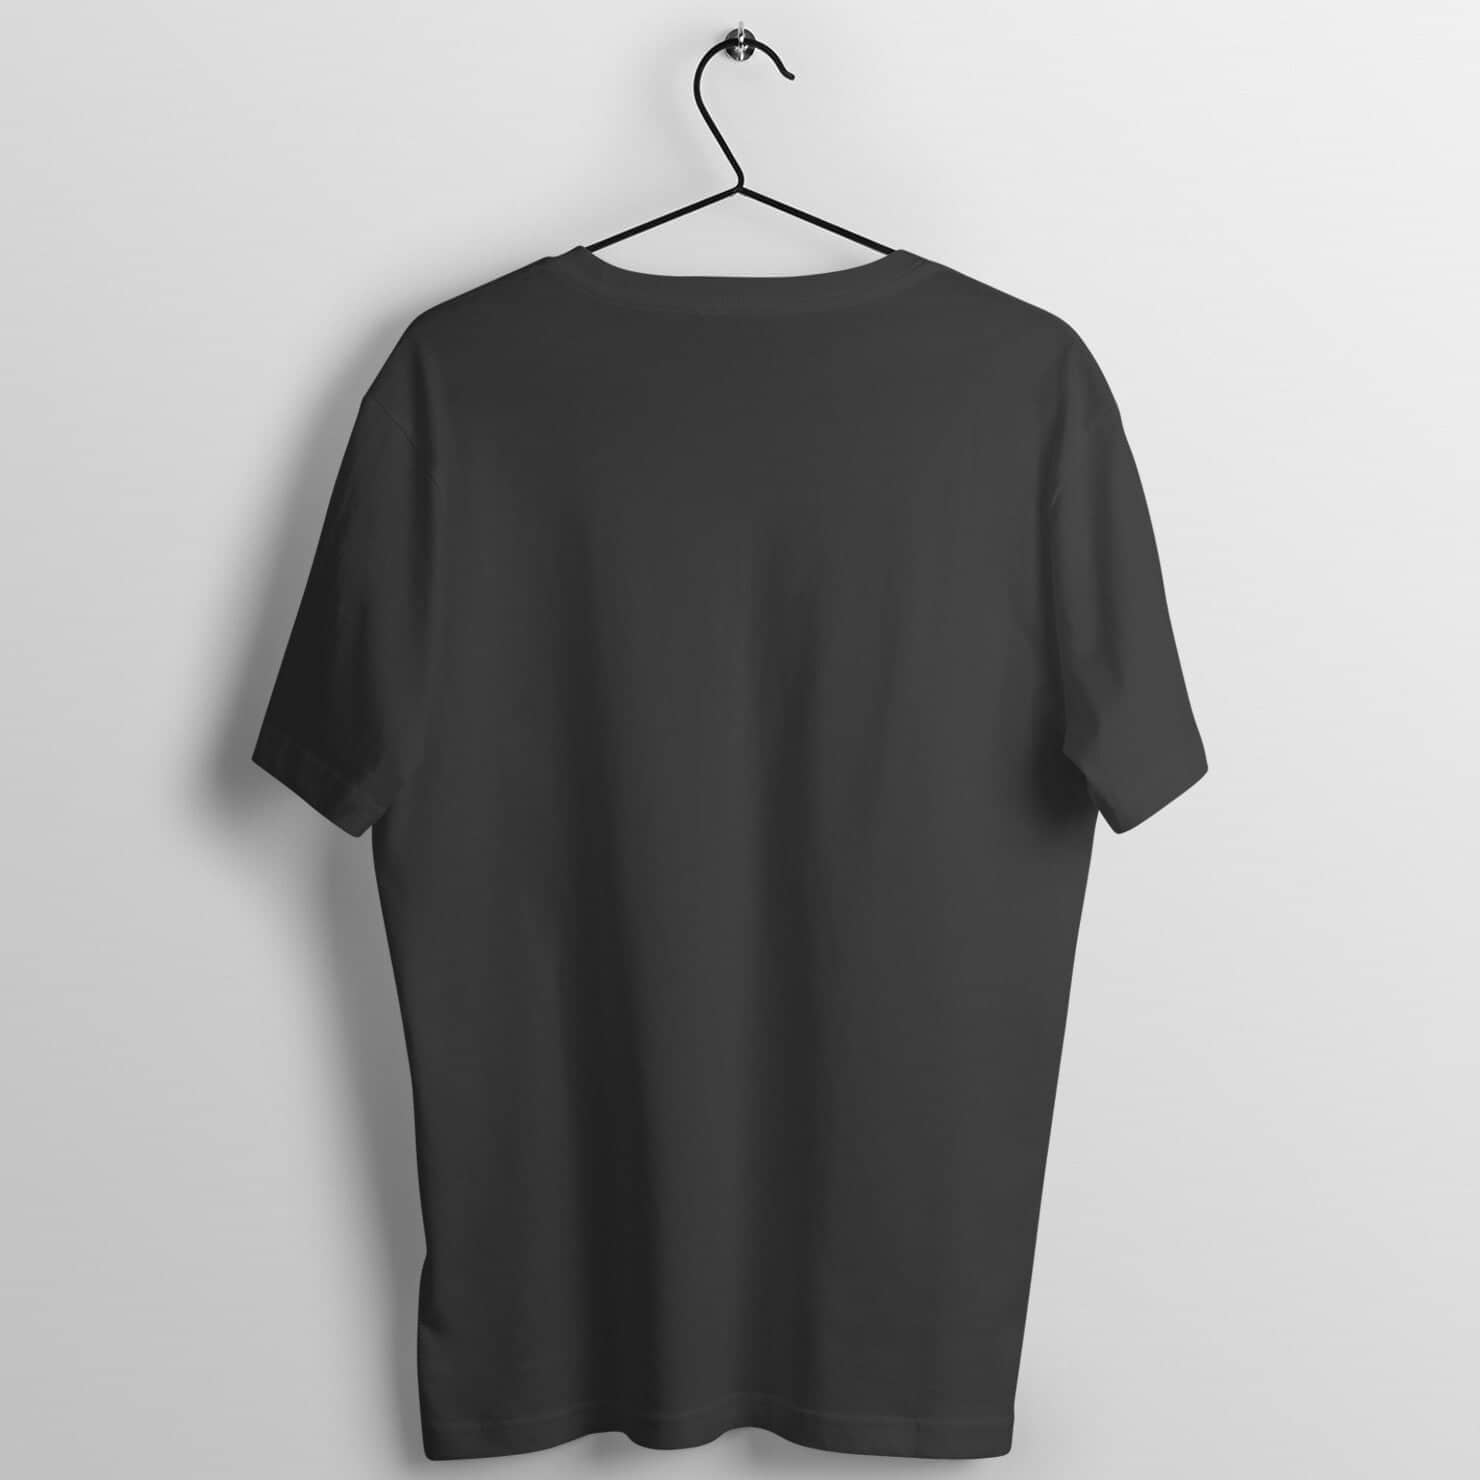 Feck Yeah Funny Modern Slang Black T Shirt for Men and Women Printrove 